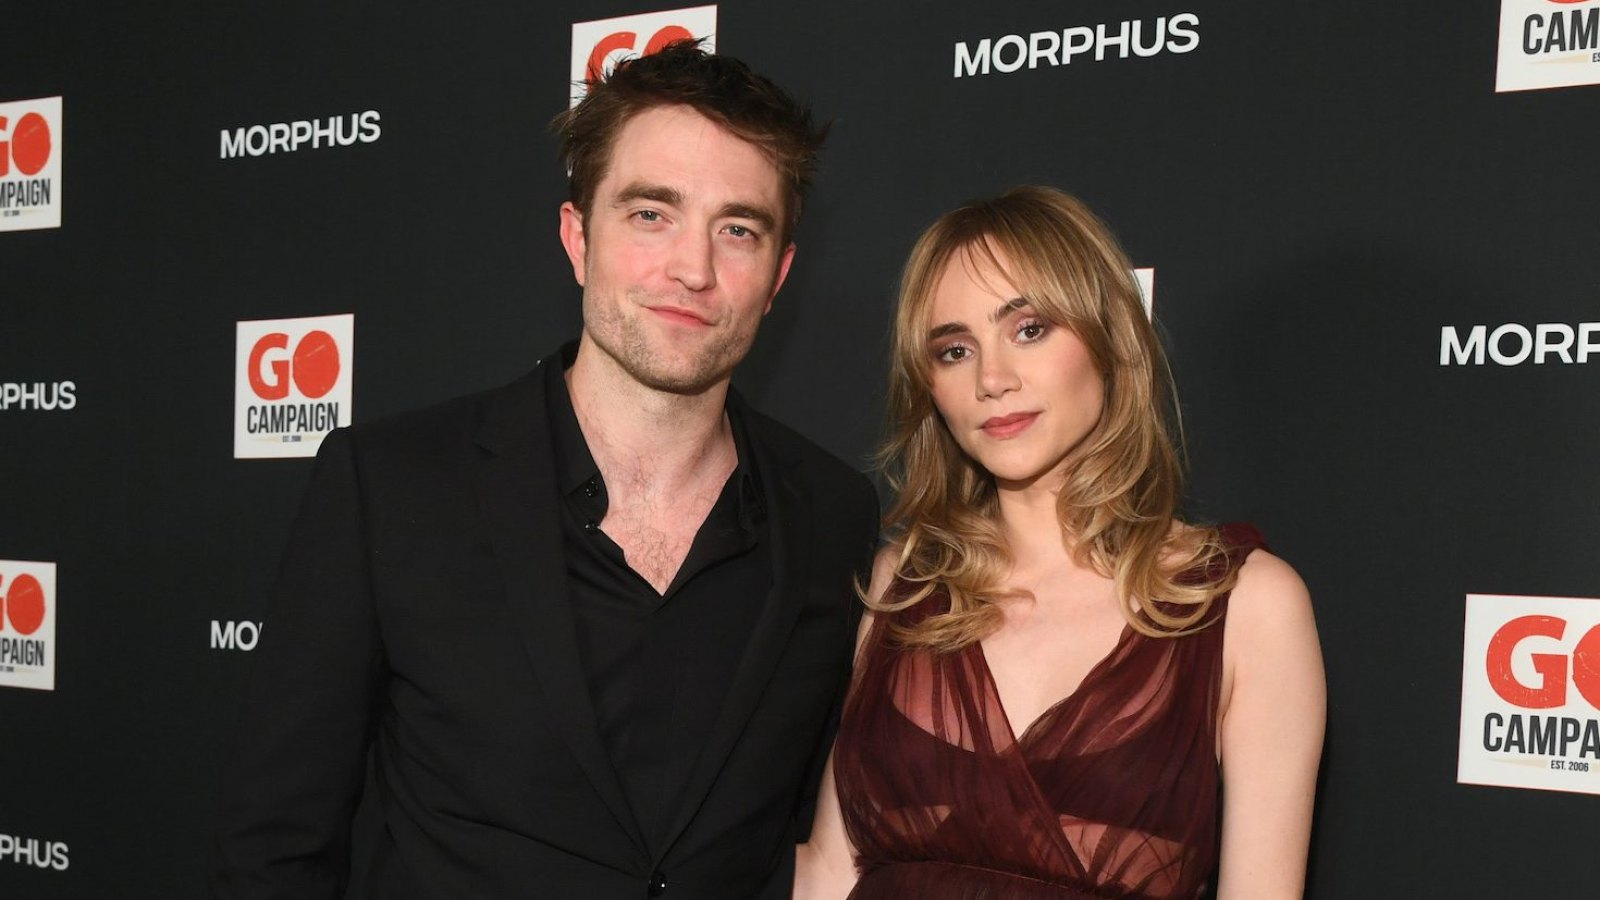 Robert Pattinson and Suki Waterhouse Make Rare Red Carpet Appearance Together at GO Campaign Gala